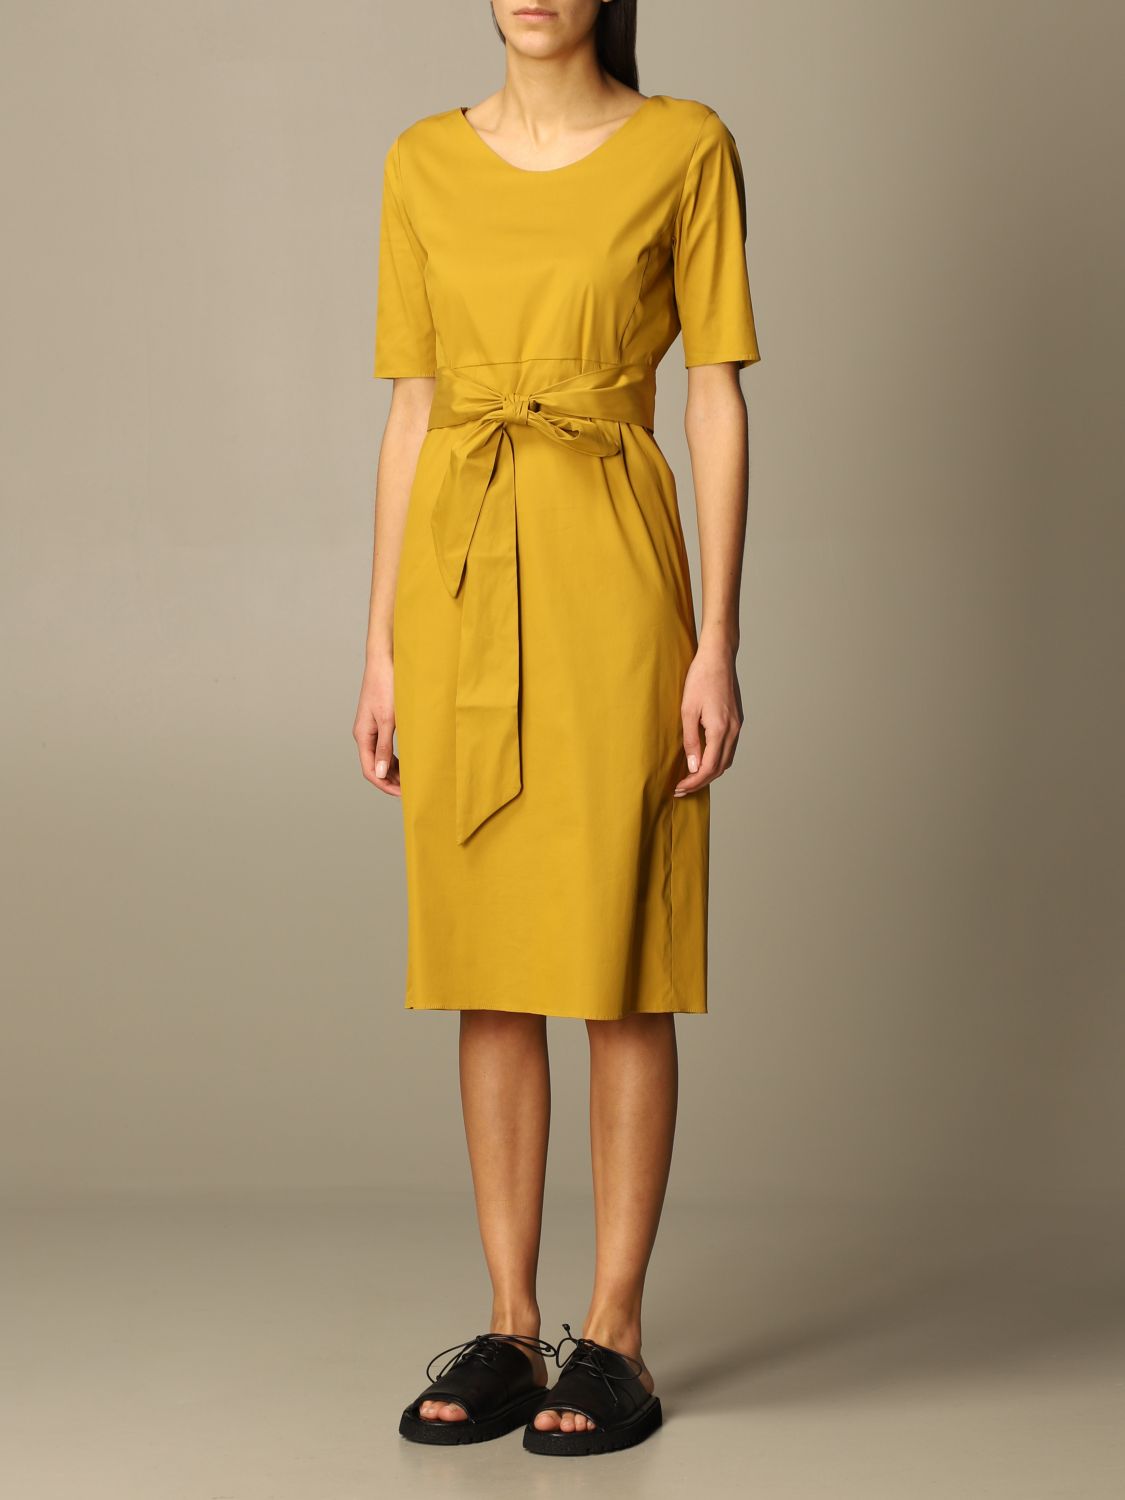 S MAX MARA: Liriche dress in cotton blend - Yellow | S Max Mara dress ...